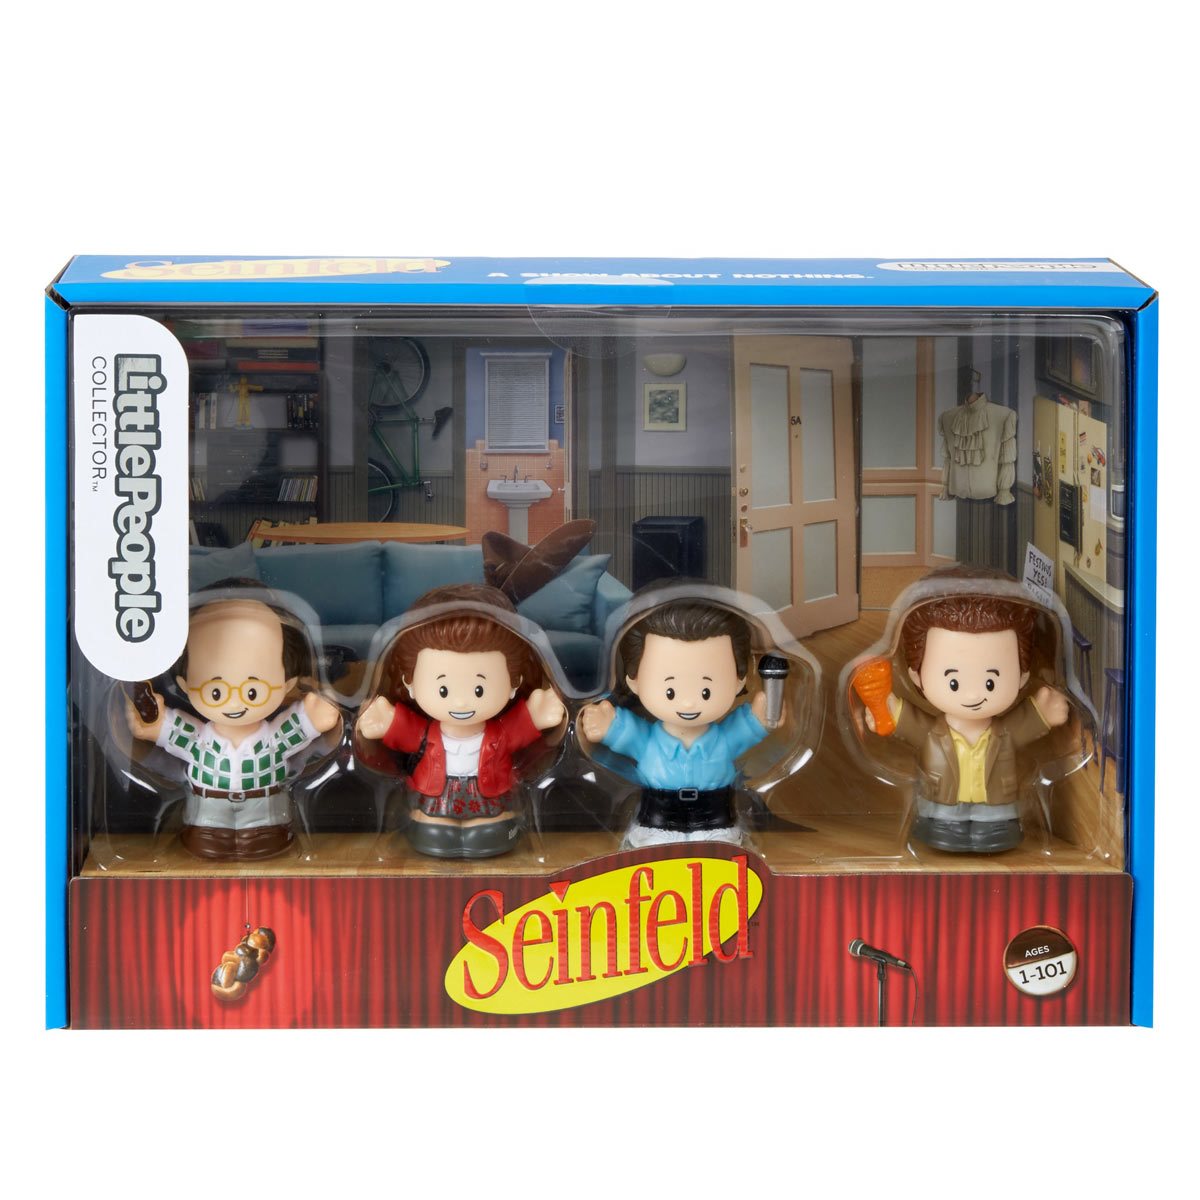 Seinfeld Little People Collector Figure Set